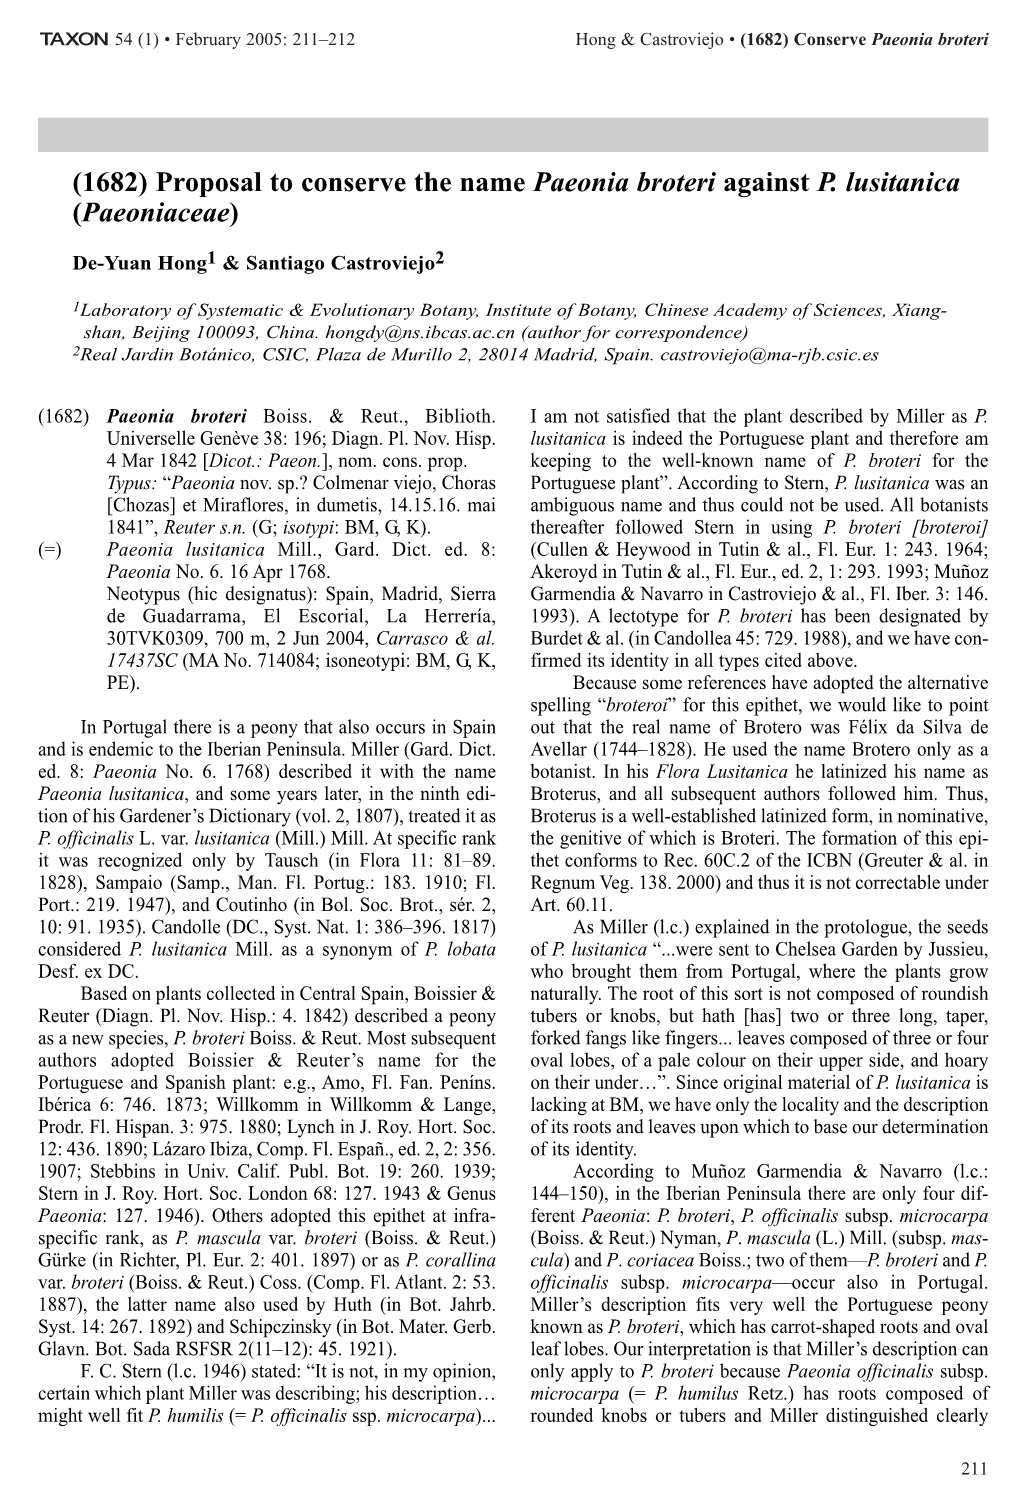 Proposal to Conserve the Name Paeonia Broteri Against P. Lusitanica (Paeoniaceae)